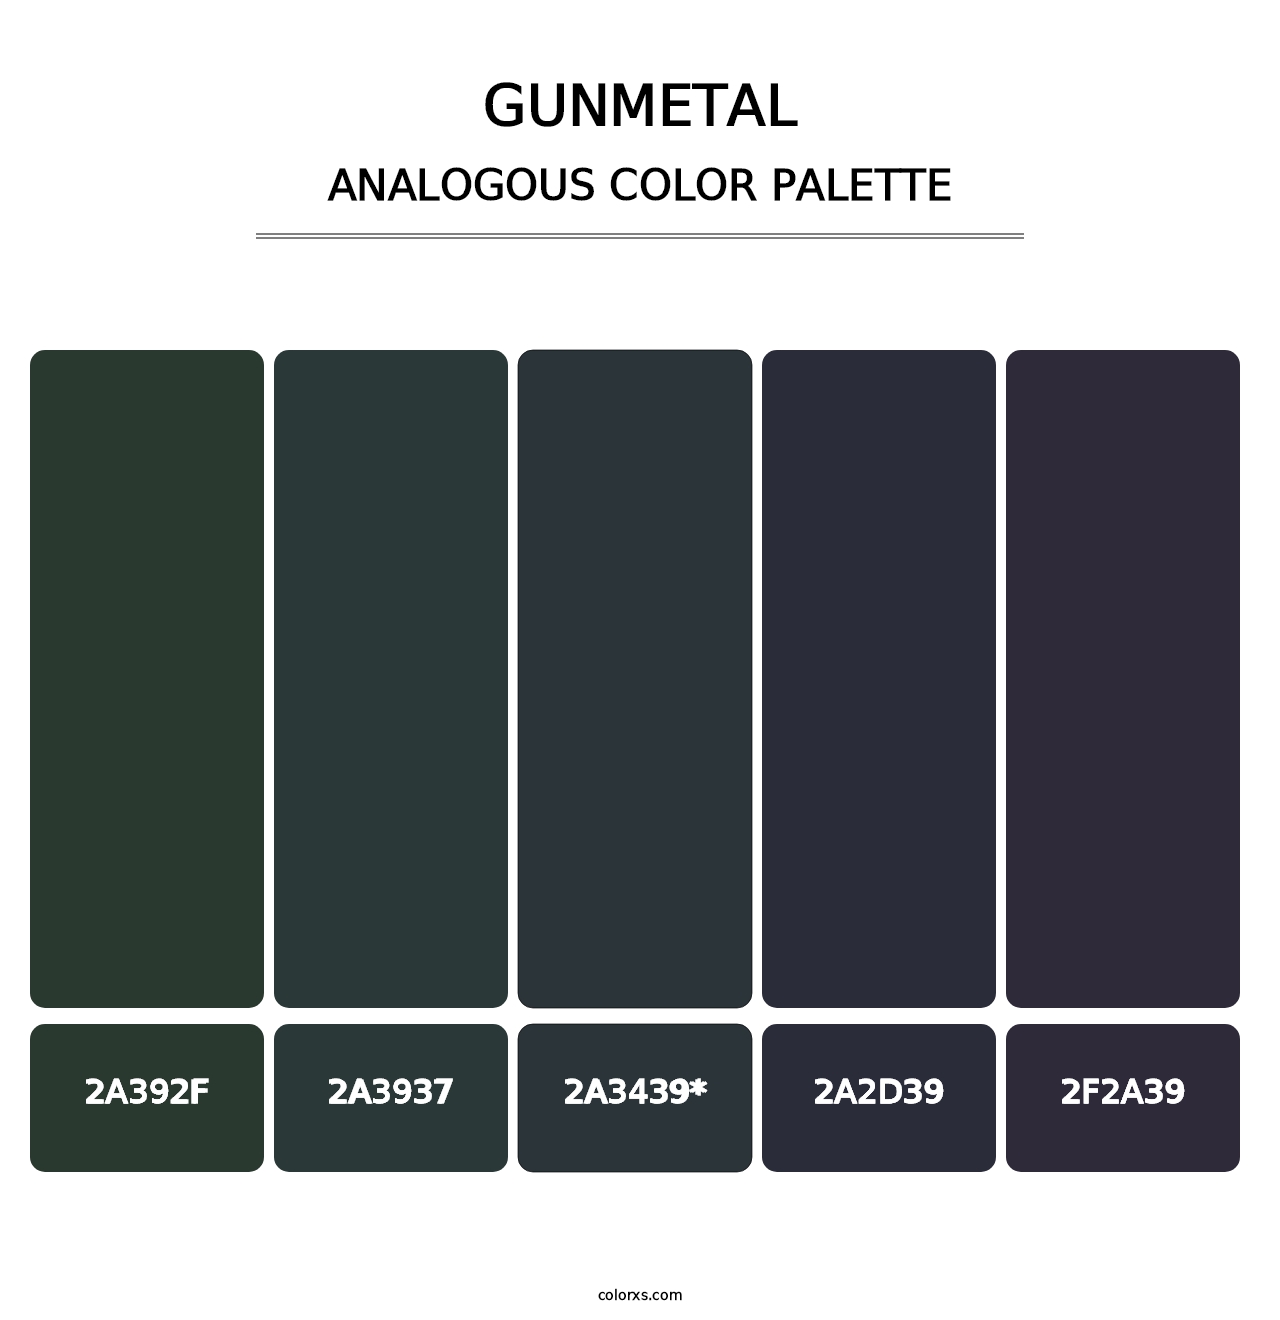 Gunmetal - Analogous Color Palette